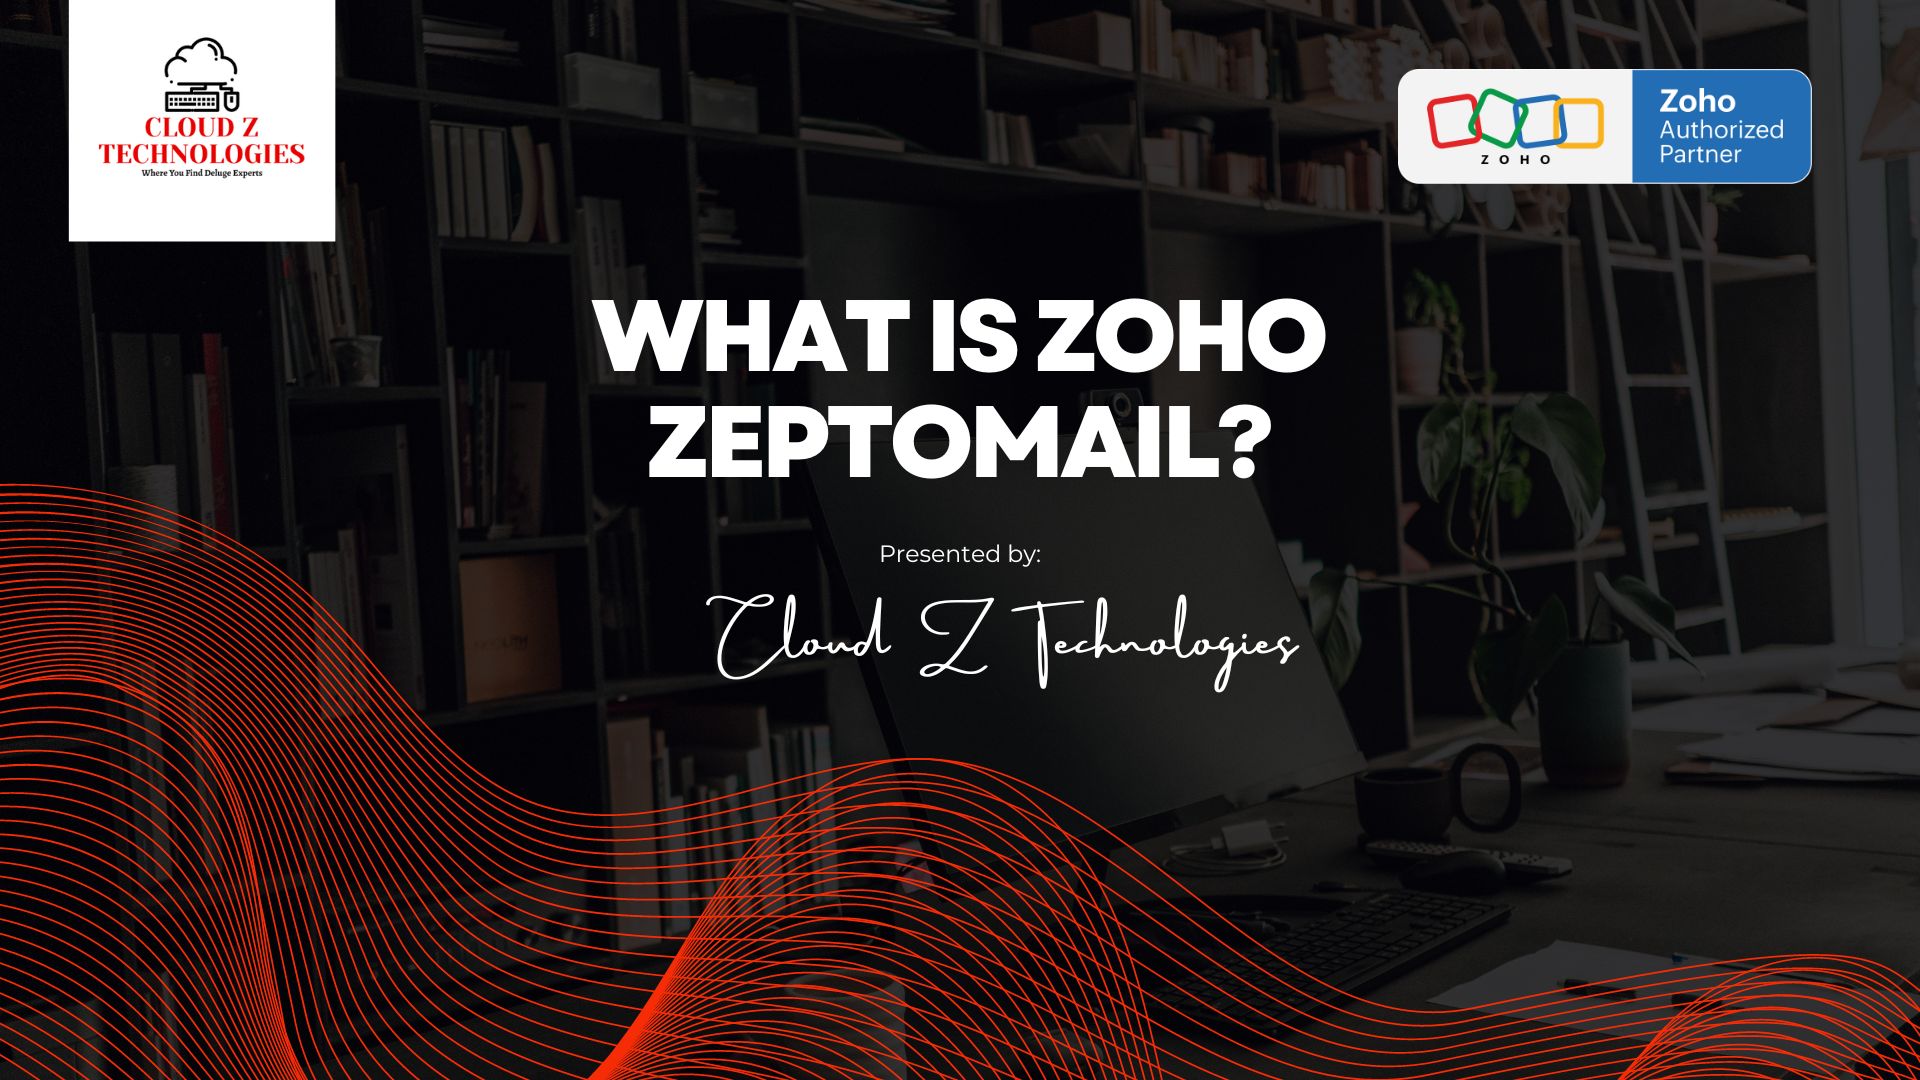 Zoho Zeptomail